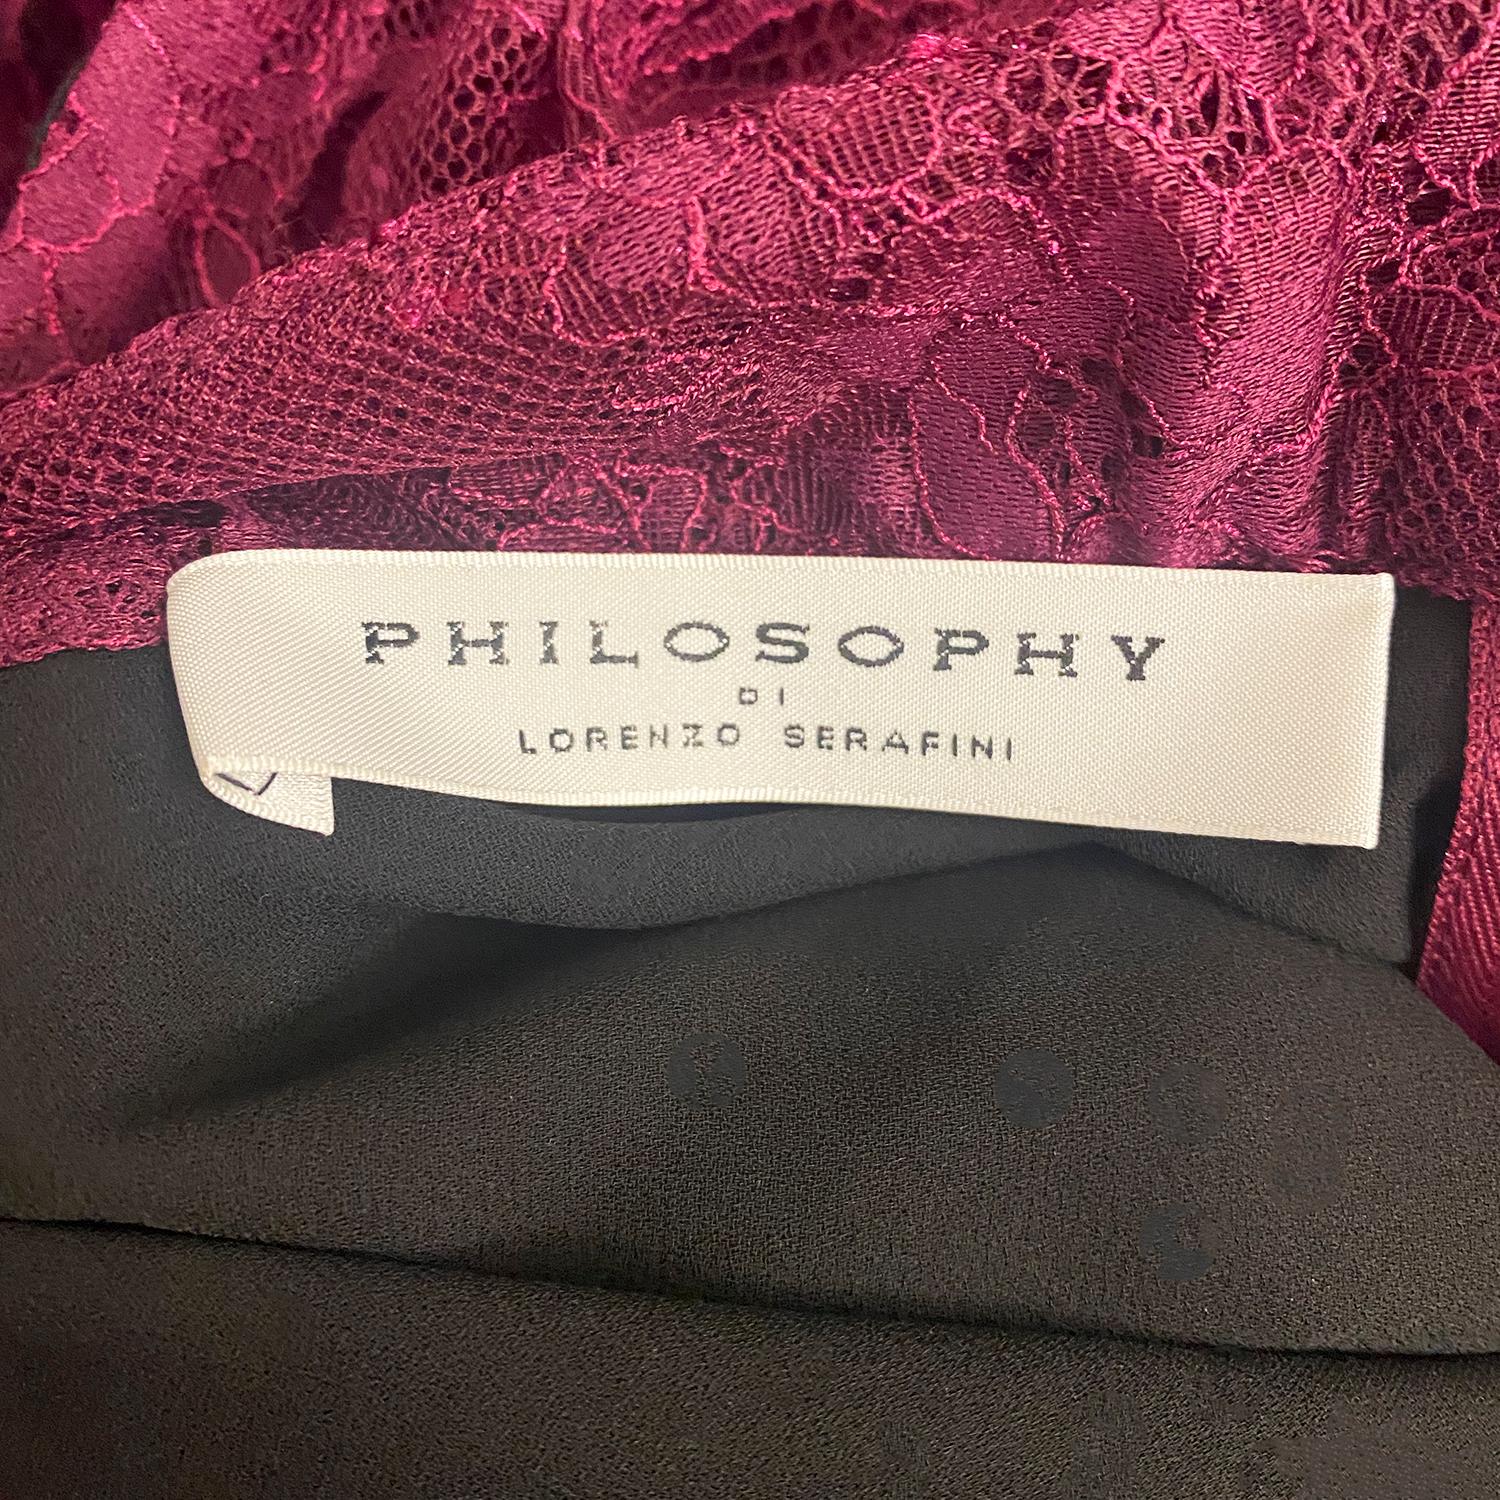 PHILOSOPHY DI LORENZO SERAFINI plum / burgundy elegant lace maxi dress 5